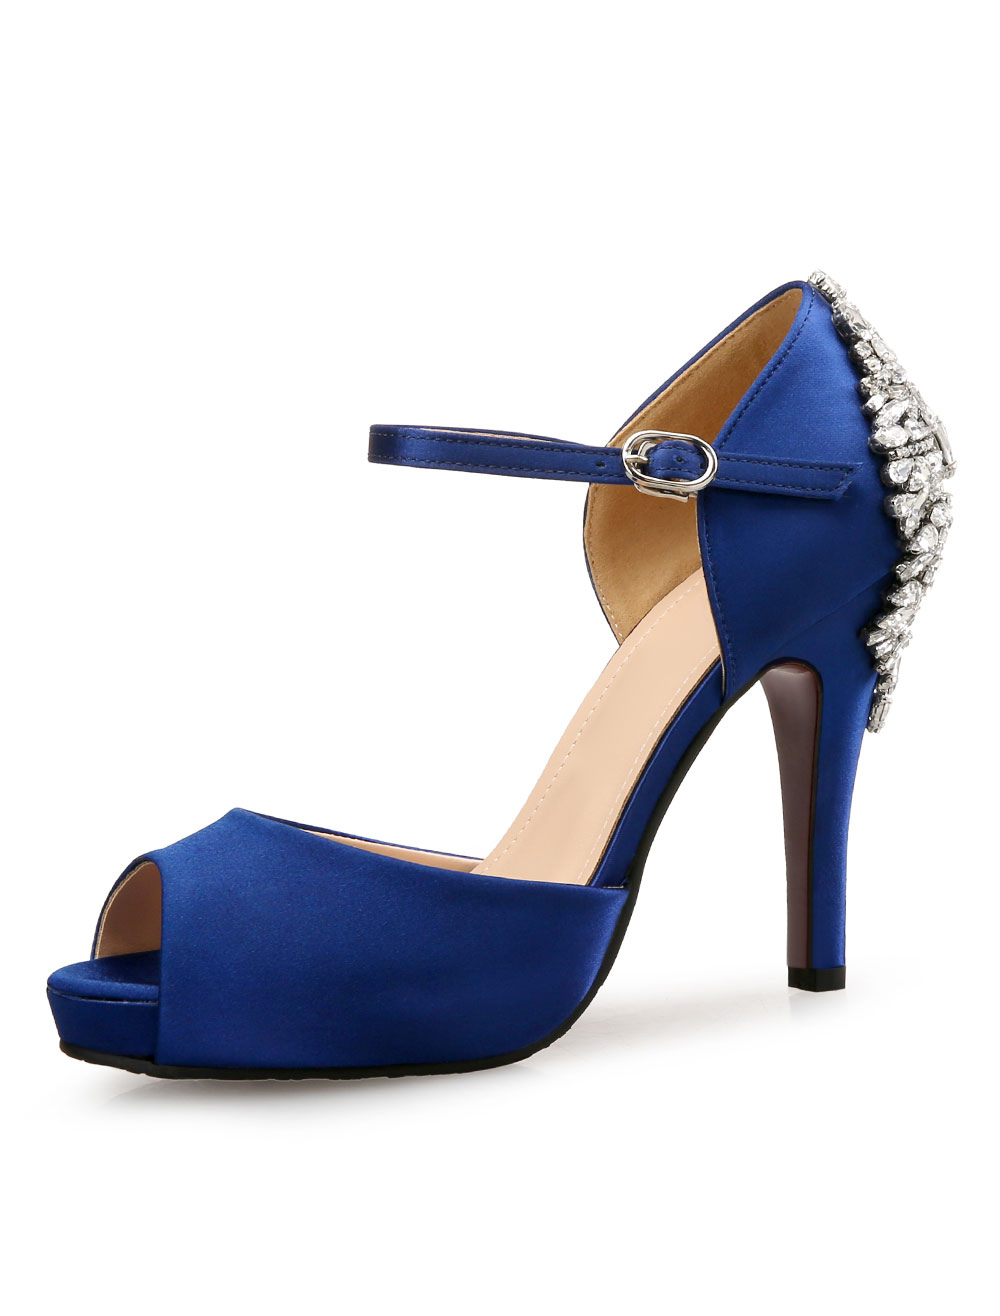 blue open toe wedding shoes